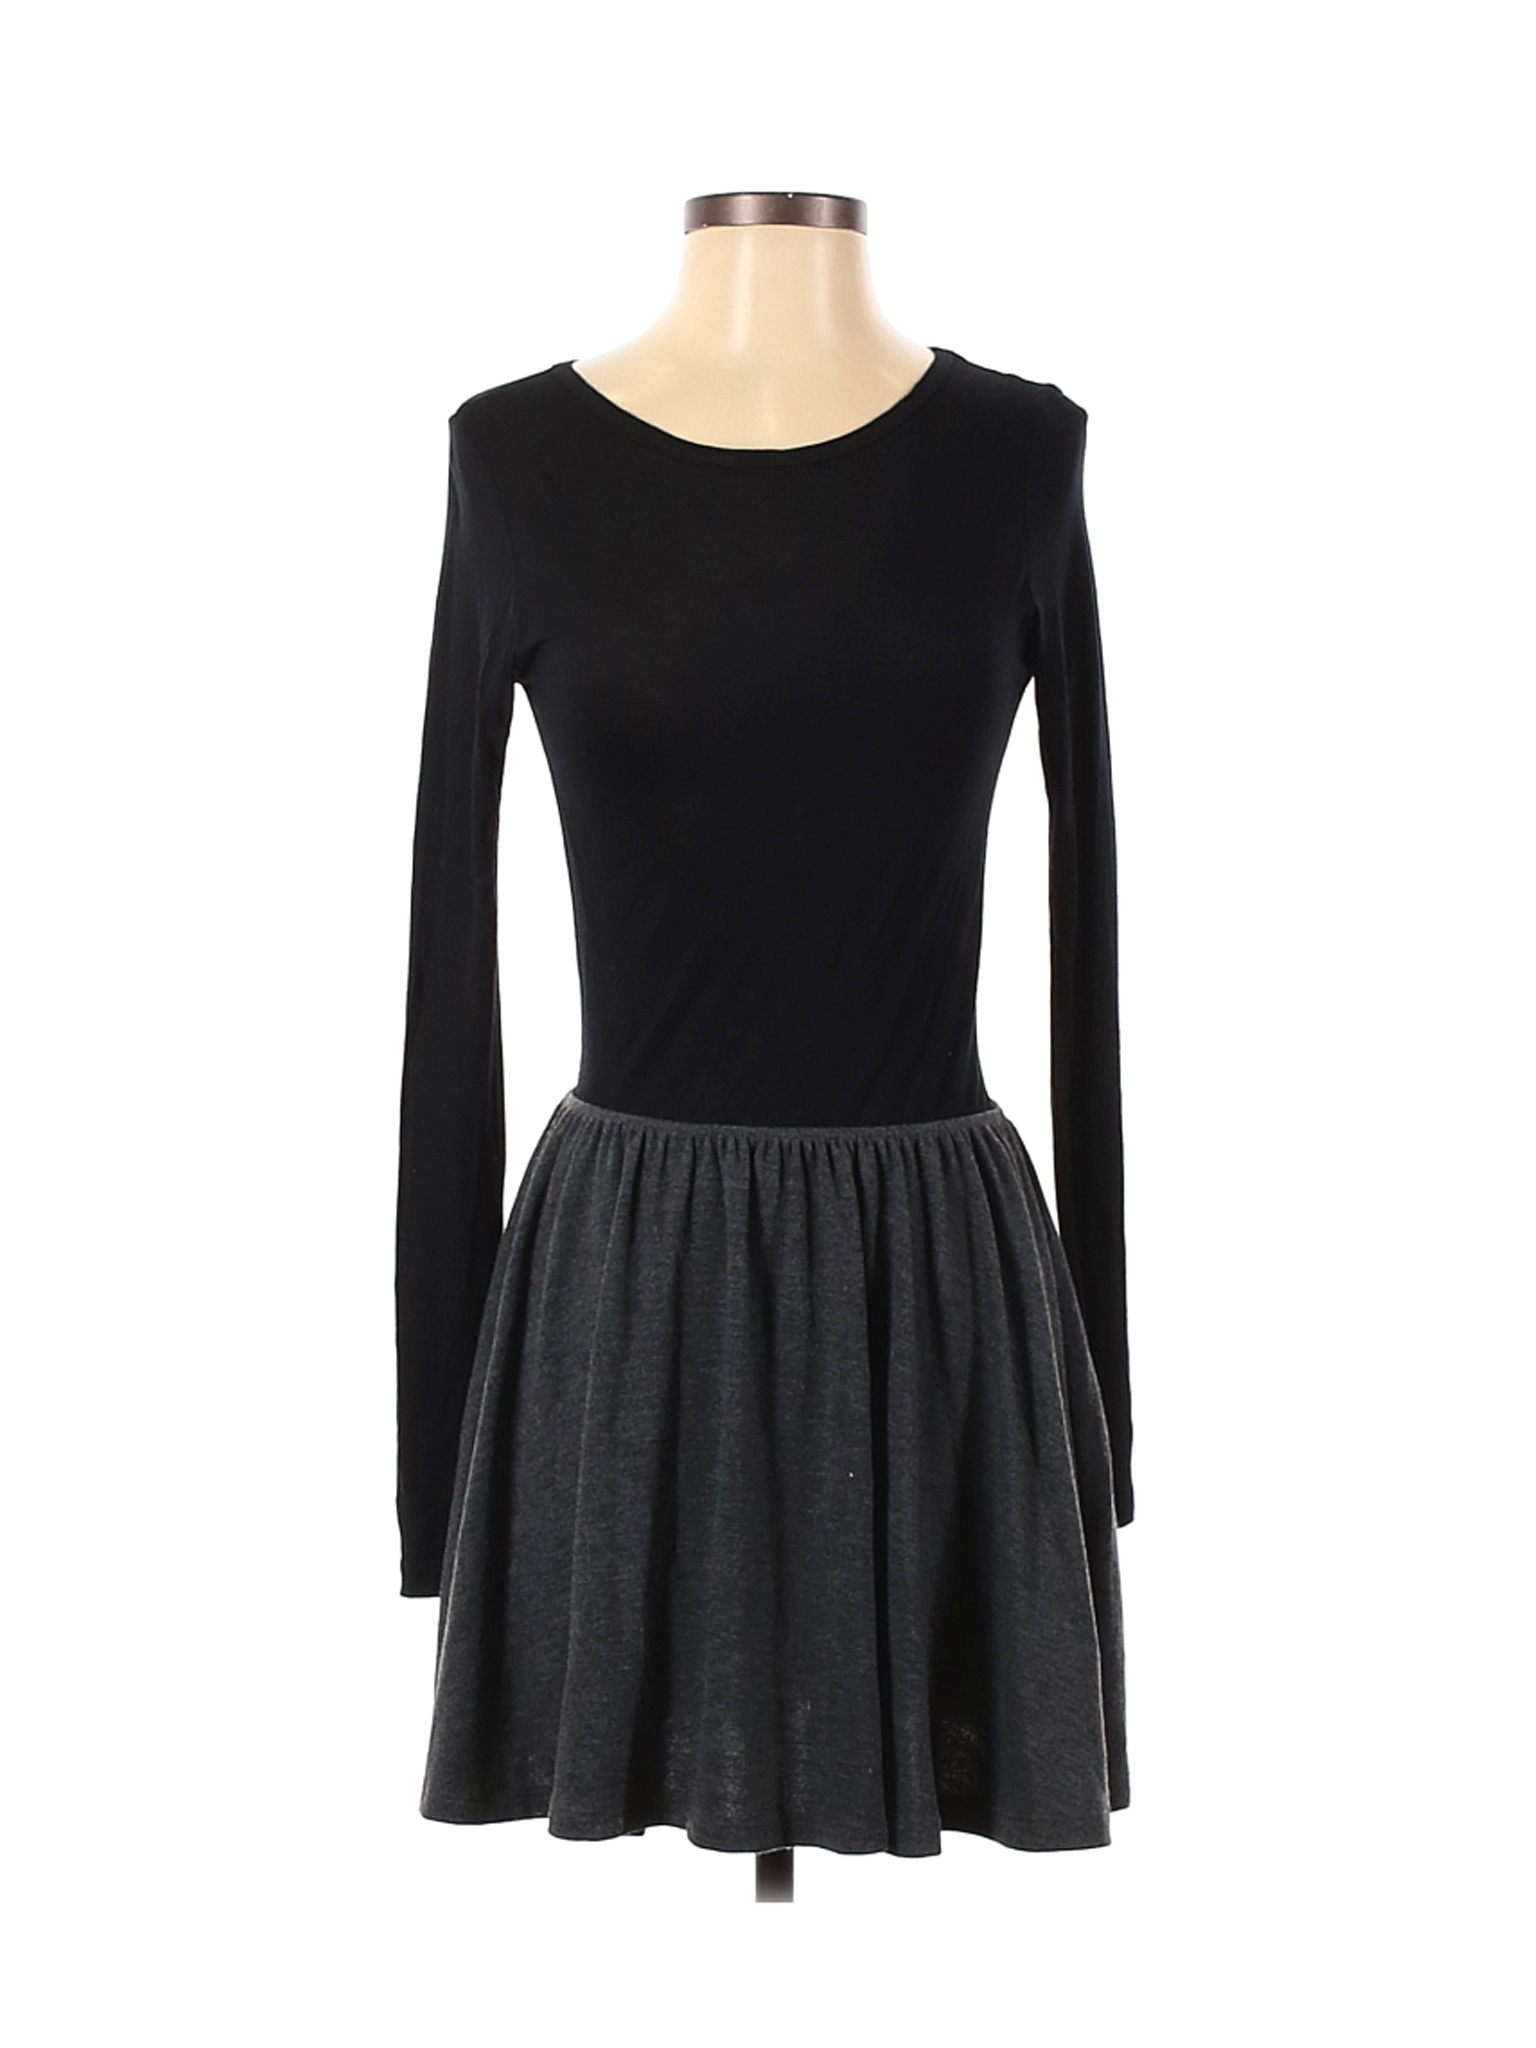 LnA Women Black Casual Dress S | eBay